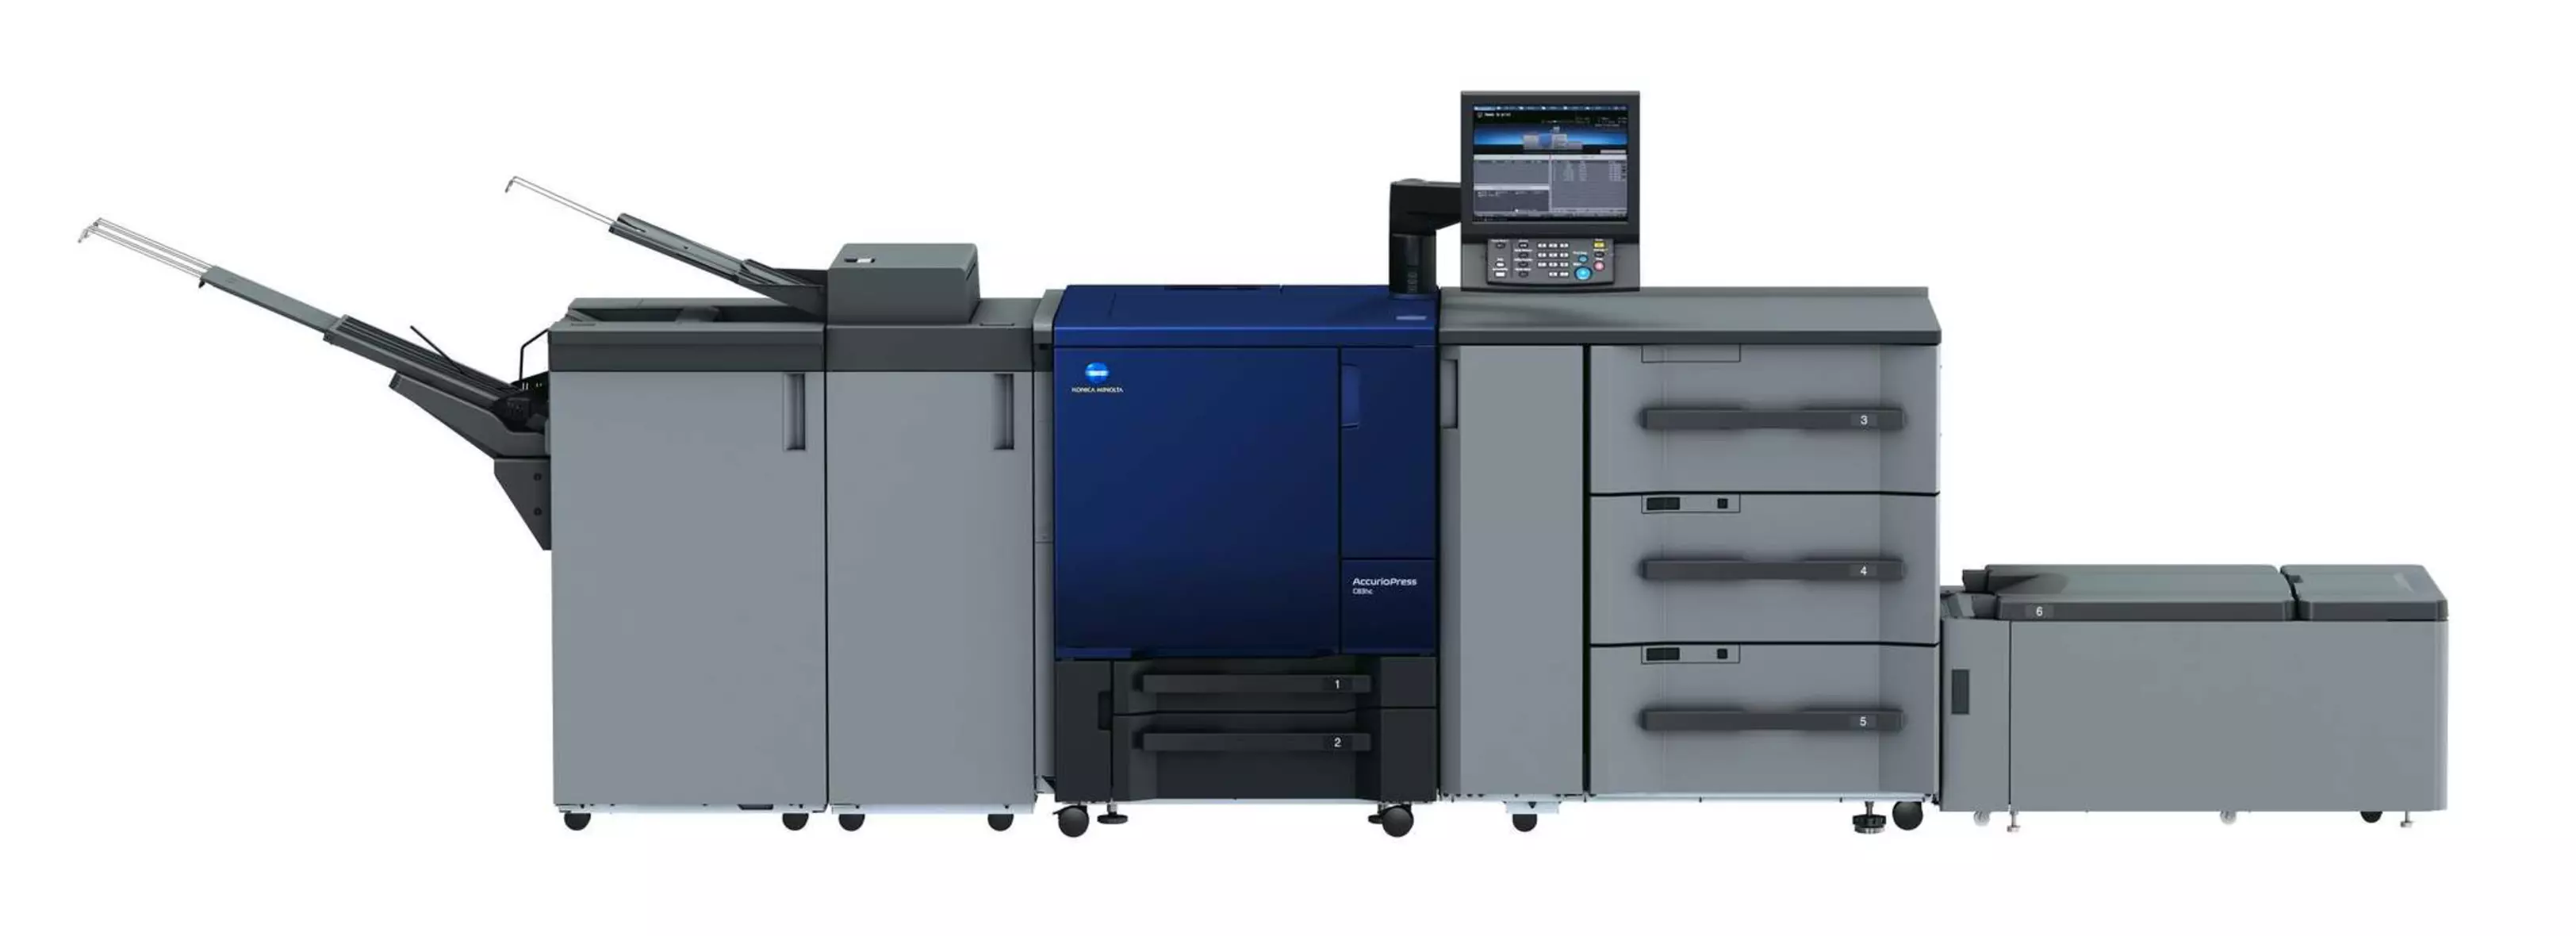 Konica Minolta AccurioPress c83hc professionel printer